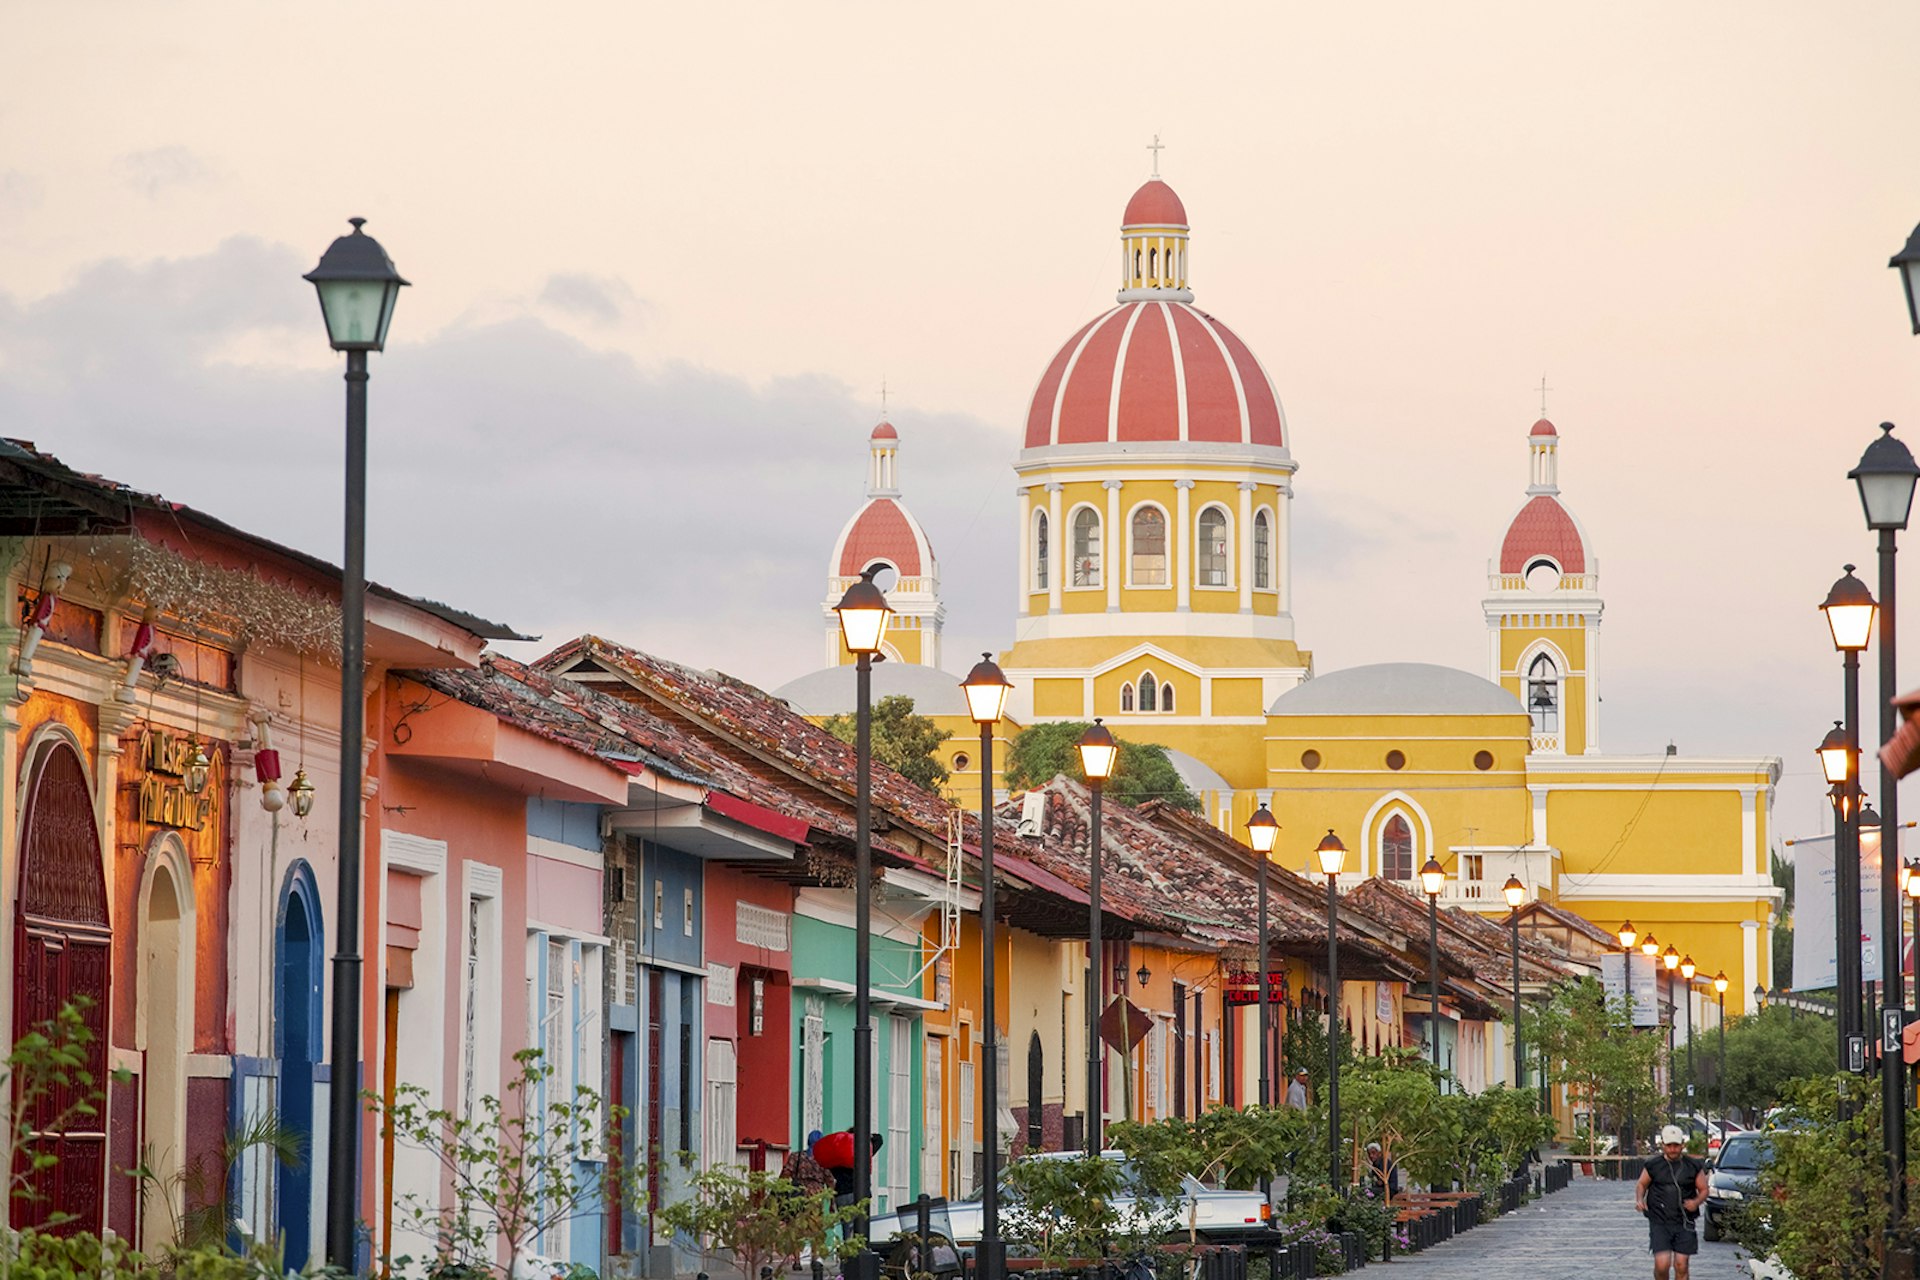 Features - Nicaragua, Granada, Calle La Calzada and Cathedral de Granada